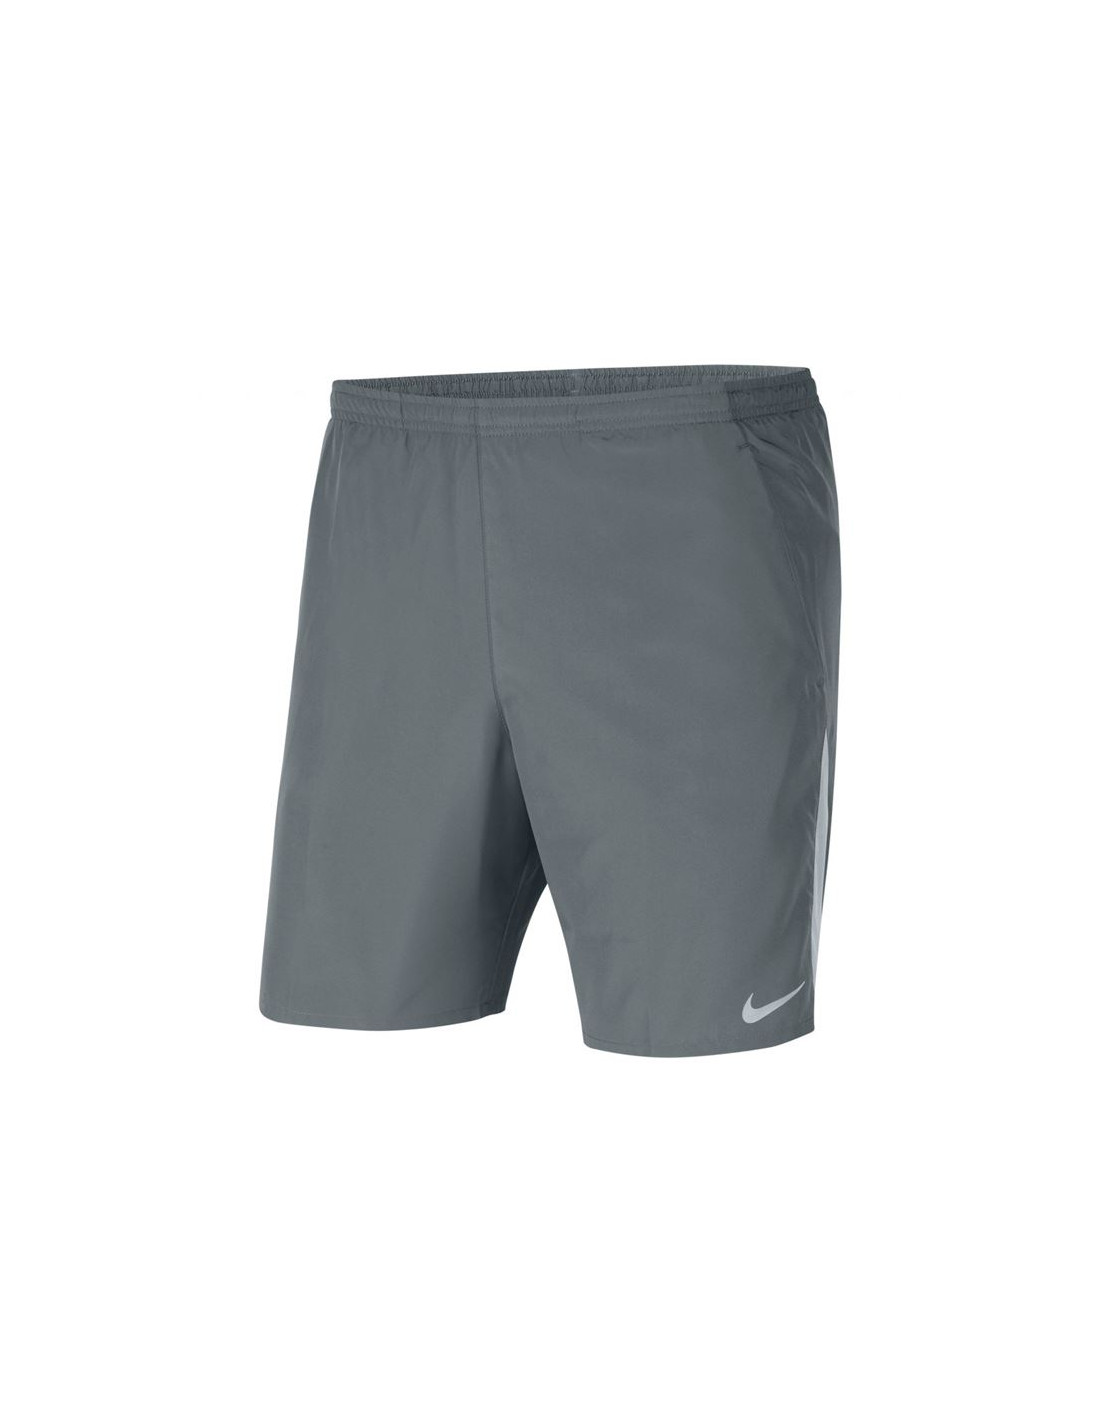 Pantalones cortos running nike 7 inch running hombre grey